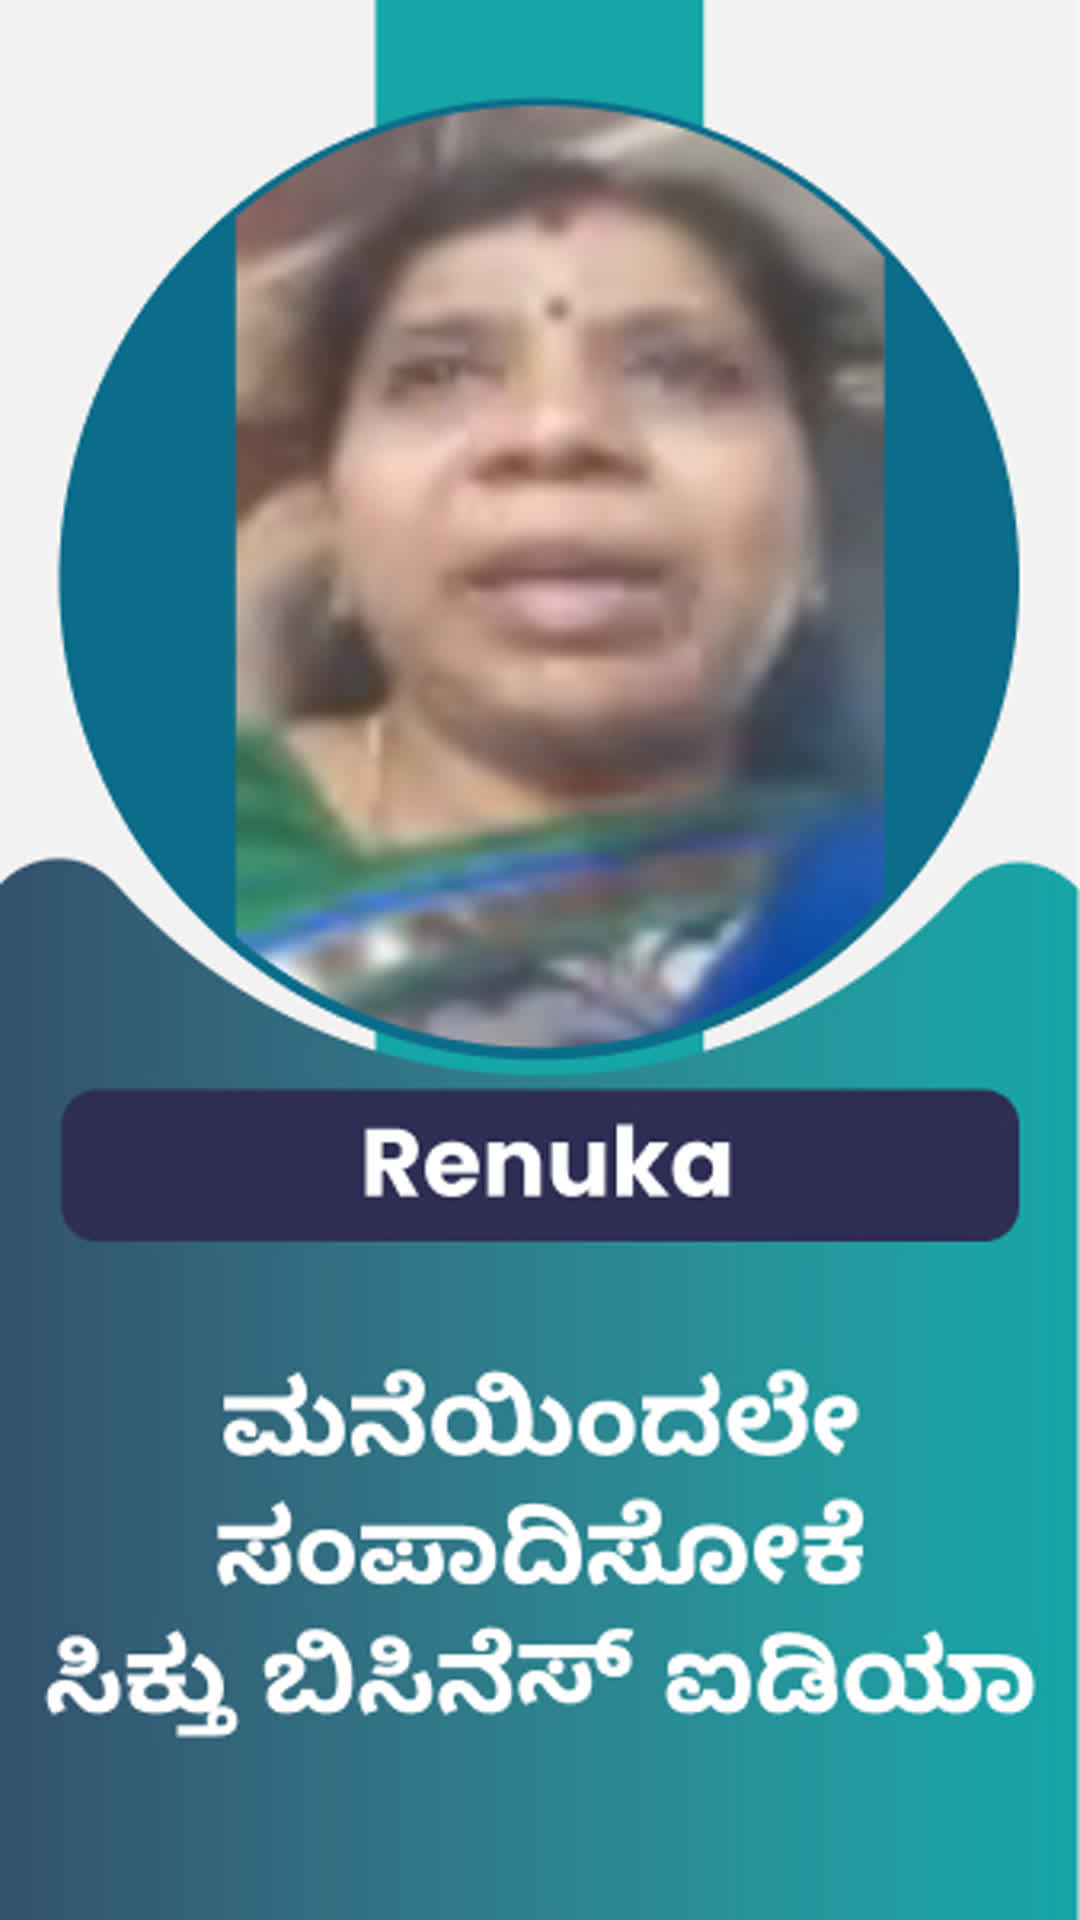 N Renuka Krishnanurthy 's Honest Review of ffreedom app - Chikballapur ,Karnataka